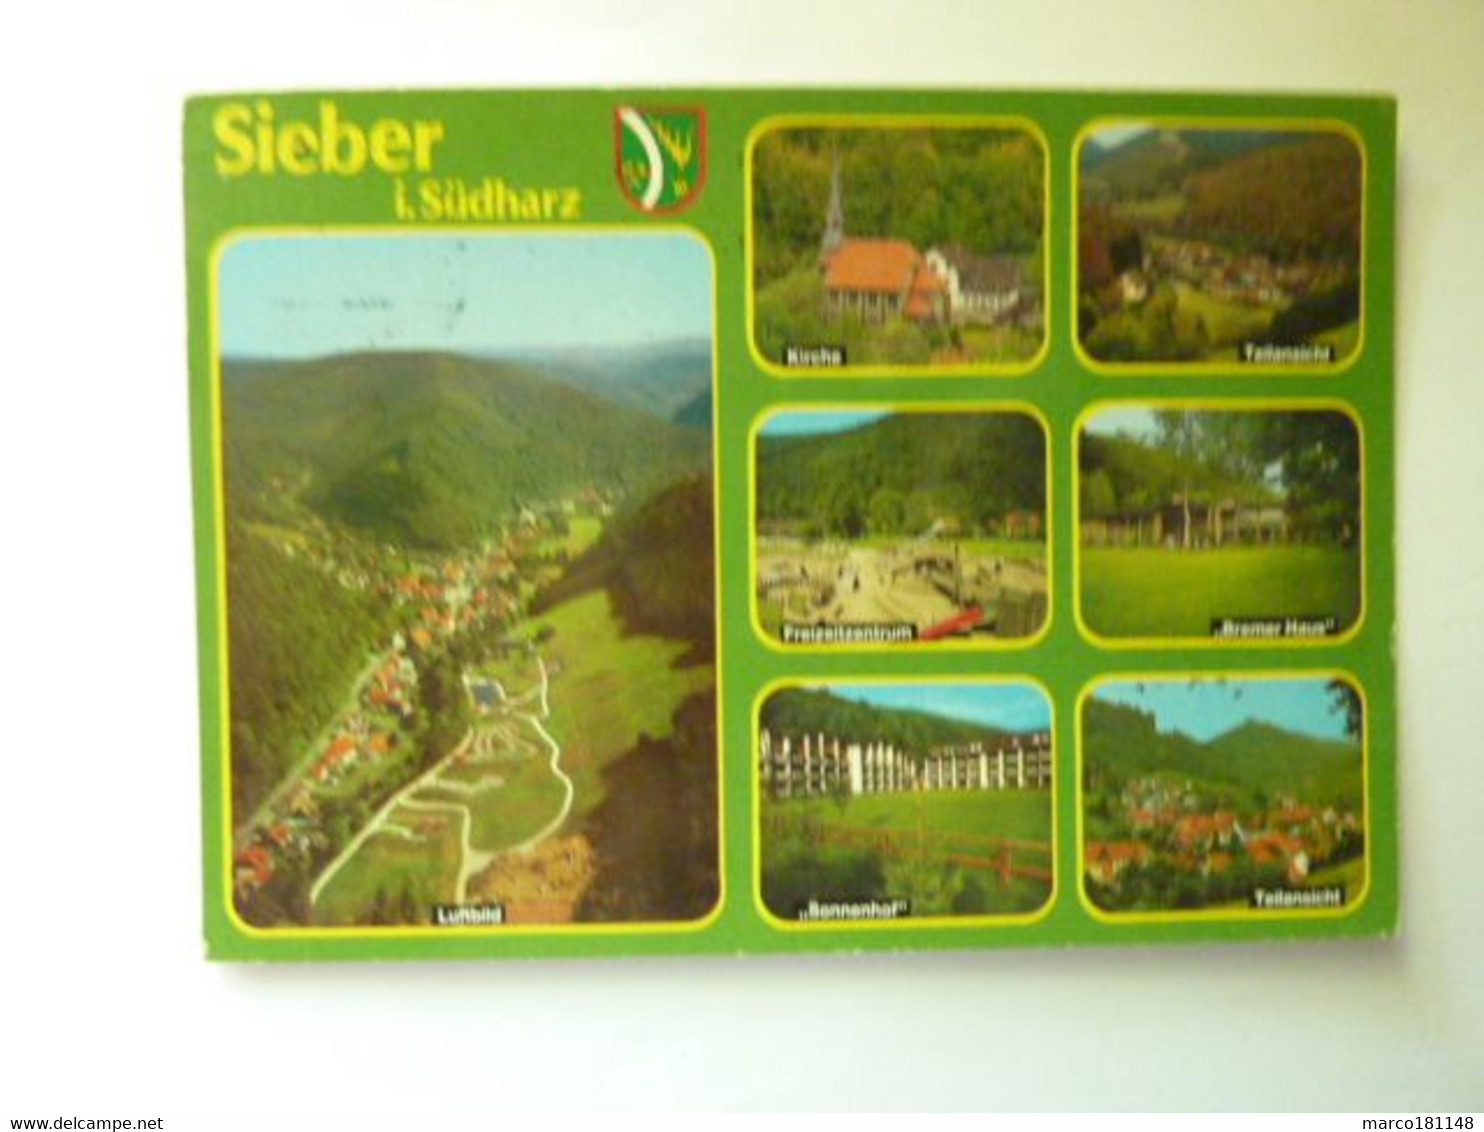 Sieber I. Südharz - Herzberg